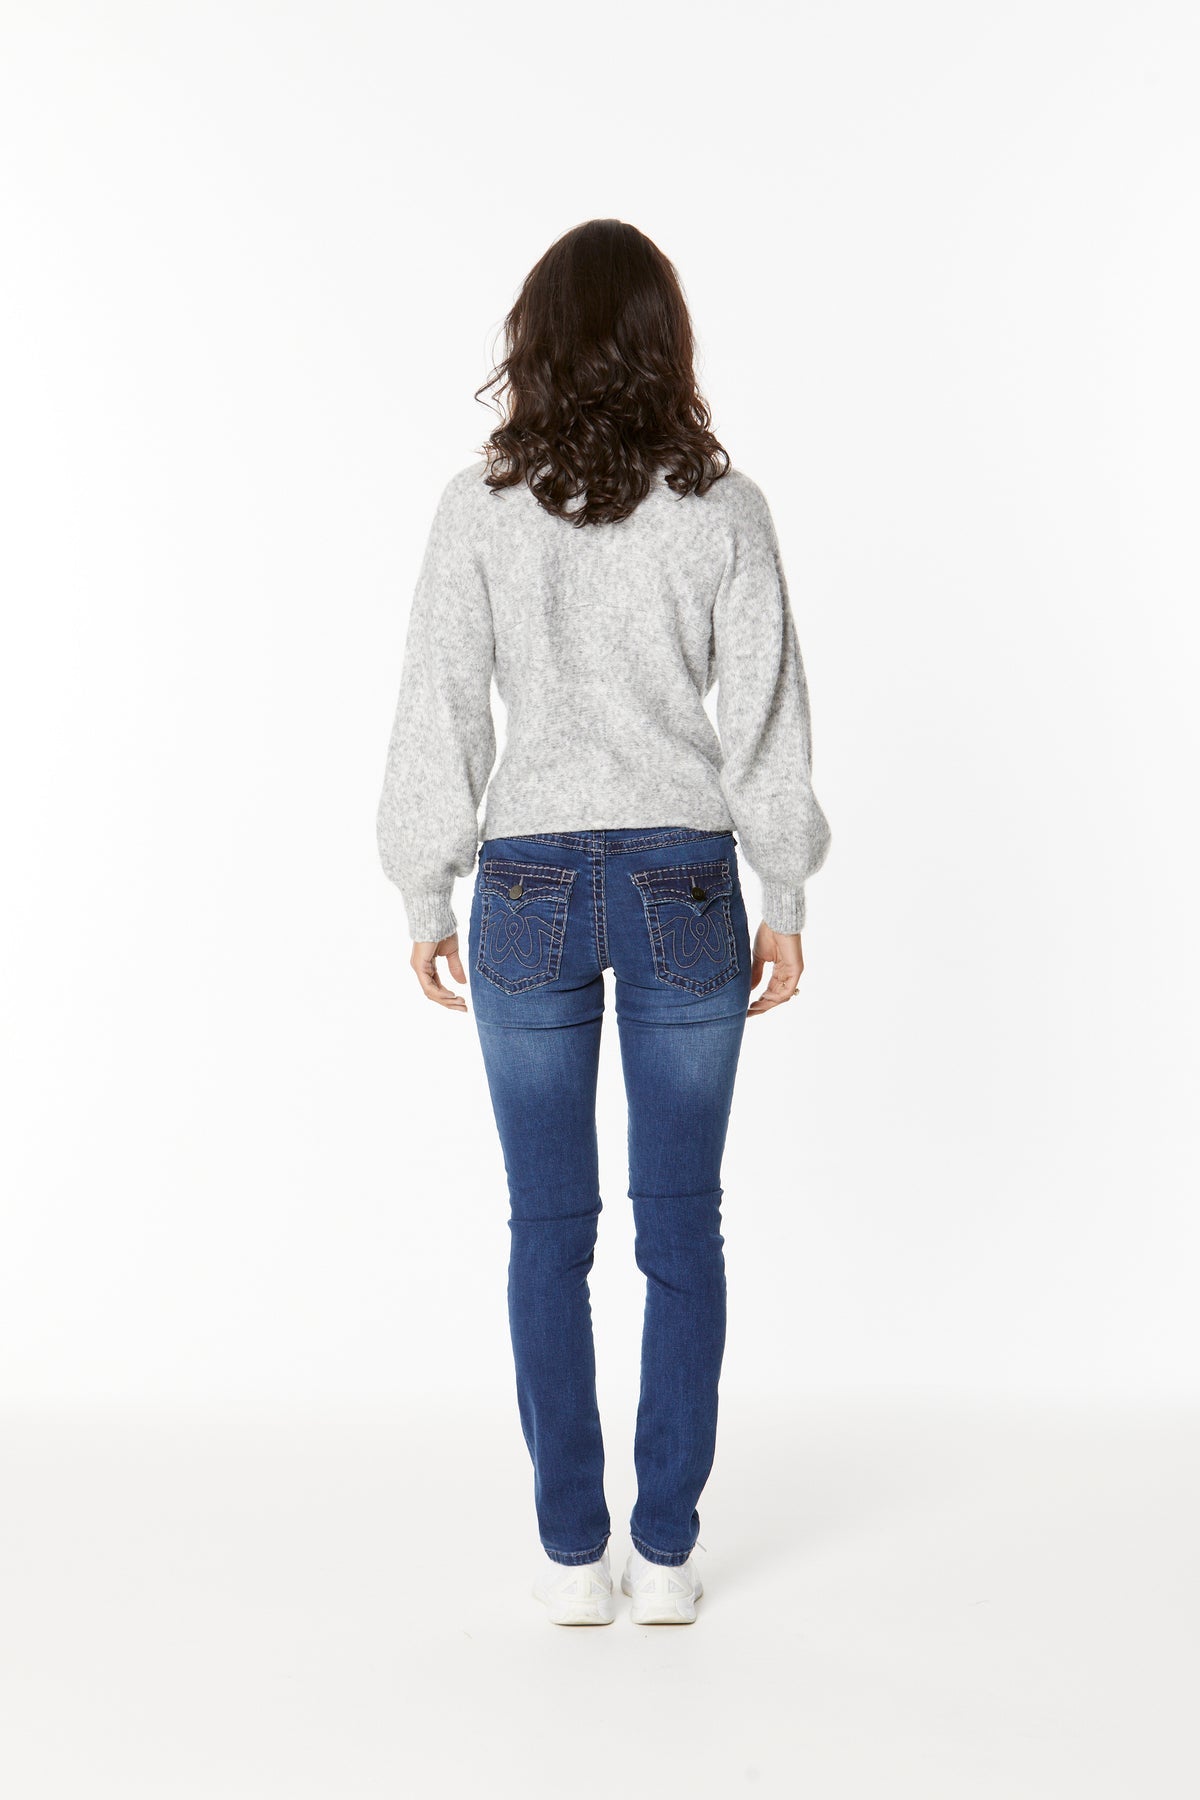 New London Jeans  - Chelsea - Grey Stitch